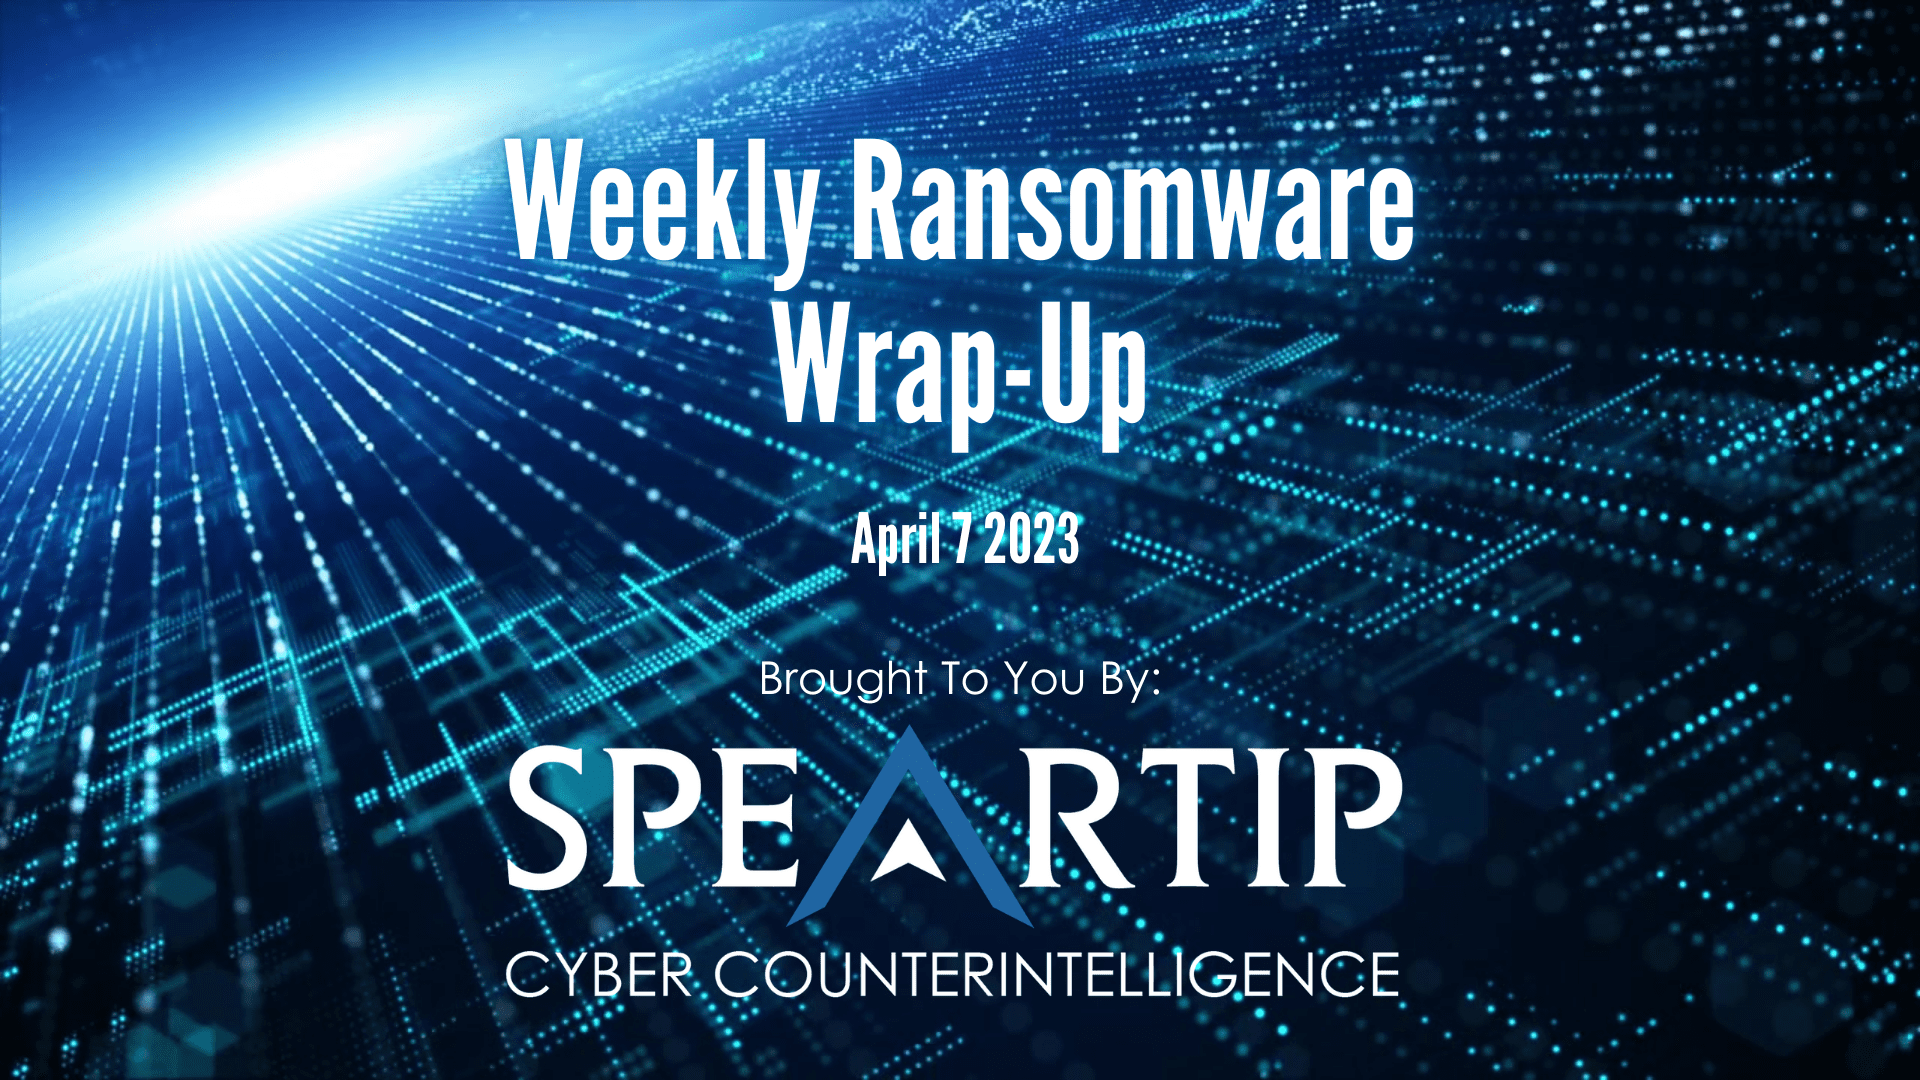 April 7, 2023 Ransomware Wrap-Up